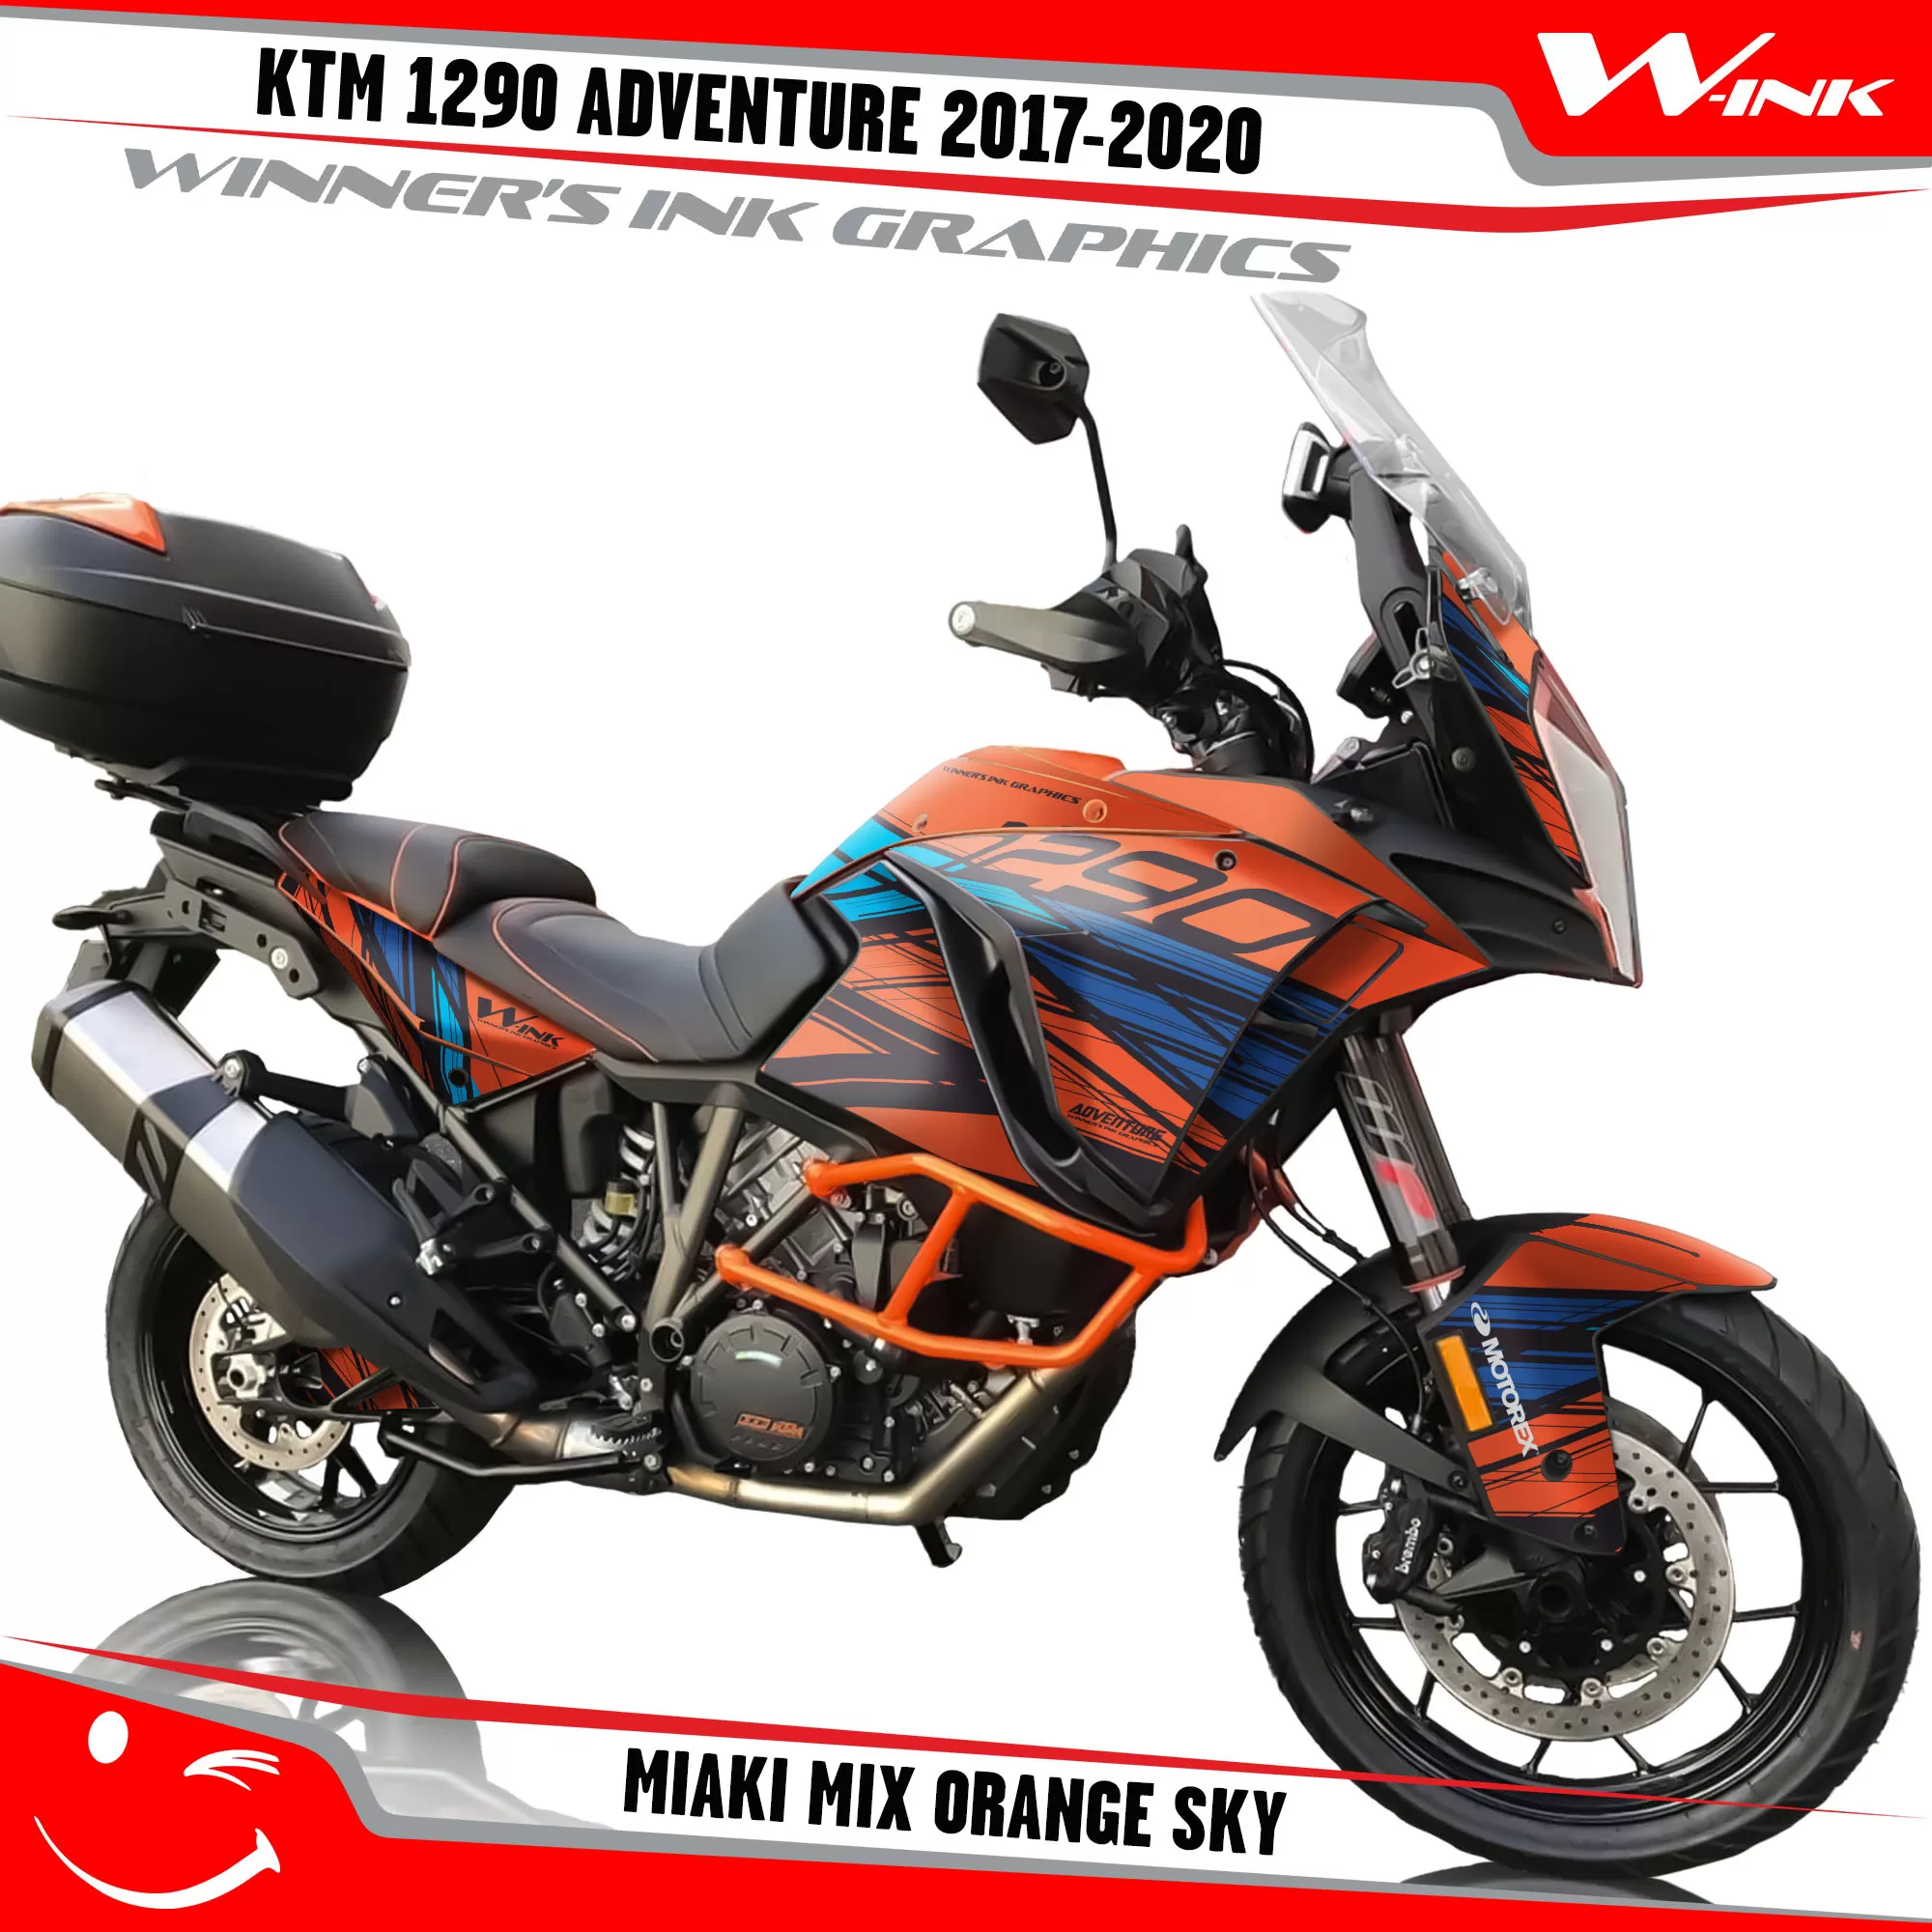 KTM-Adventure-1290-2017-2018-2019-2020-graphics-kit-and-decals-Miaki-Mix-Orange-Sky